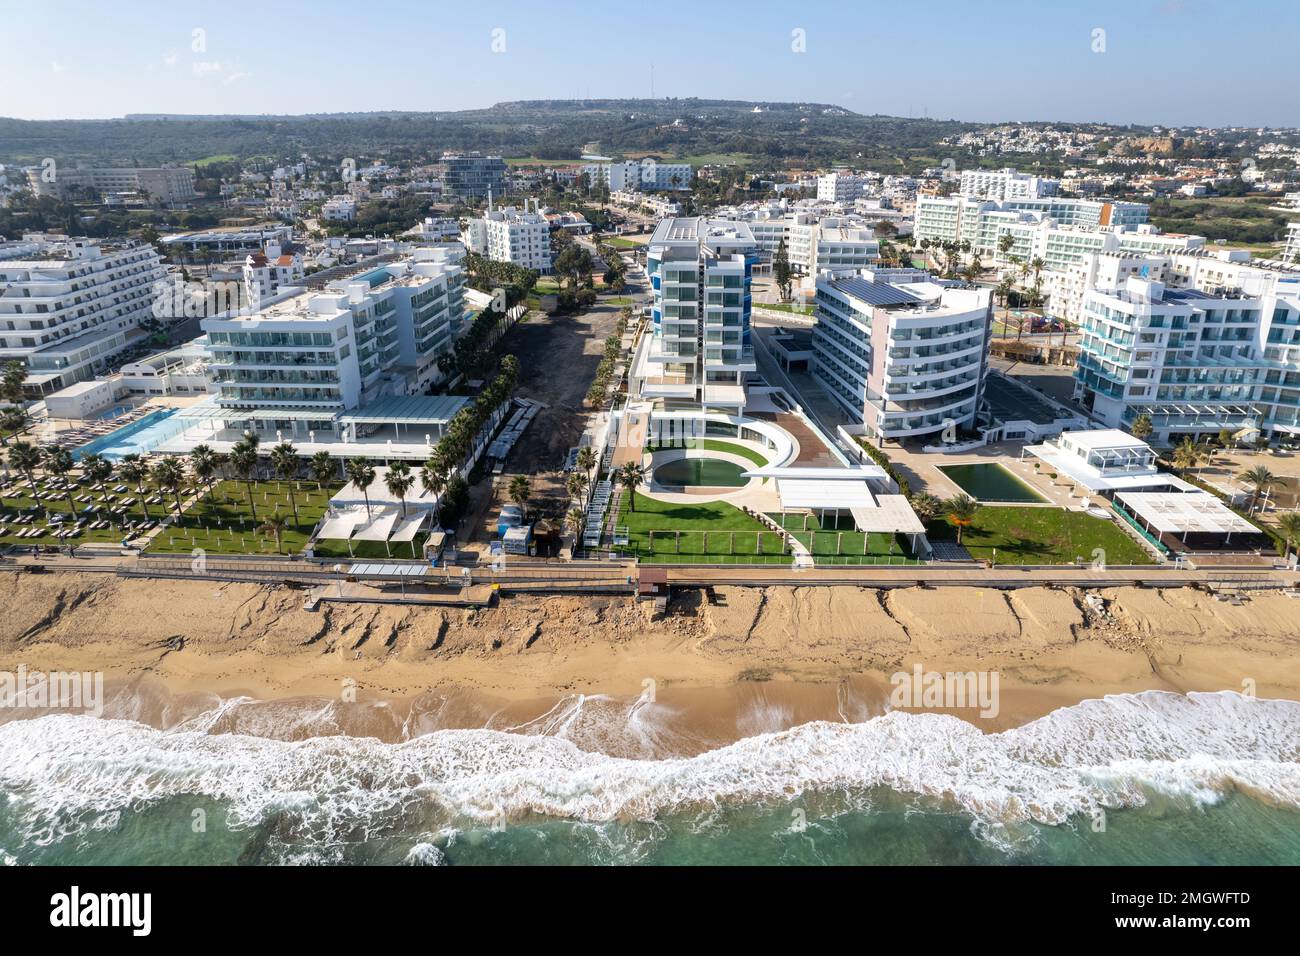 Aerial view of ocean waves breaking on a sandy beach. Beach erosion after coastal flooding. Protaras Cyprus. Stock Photo